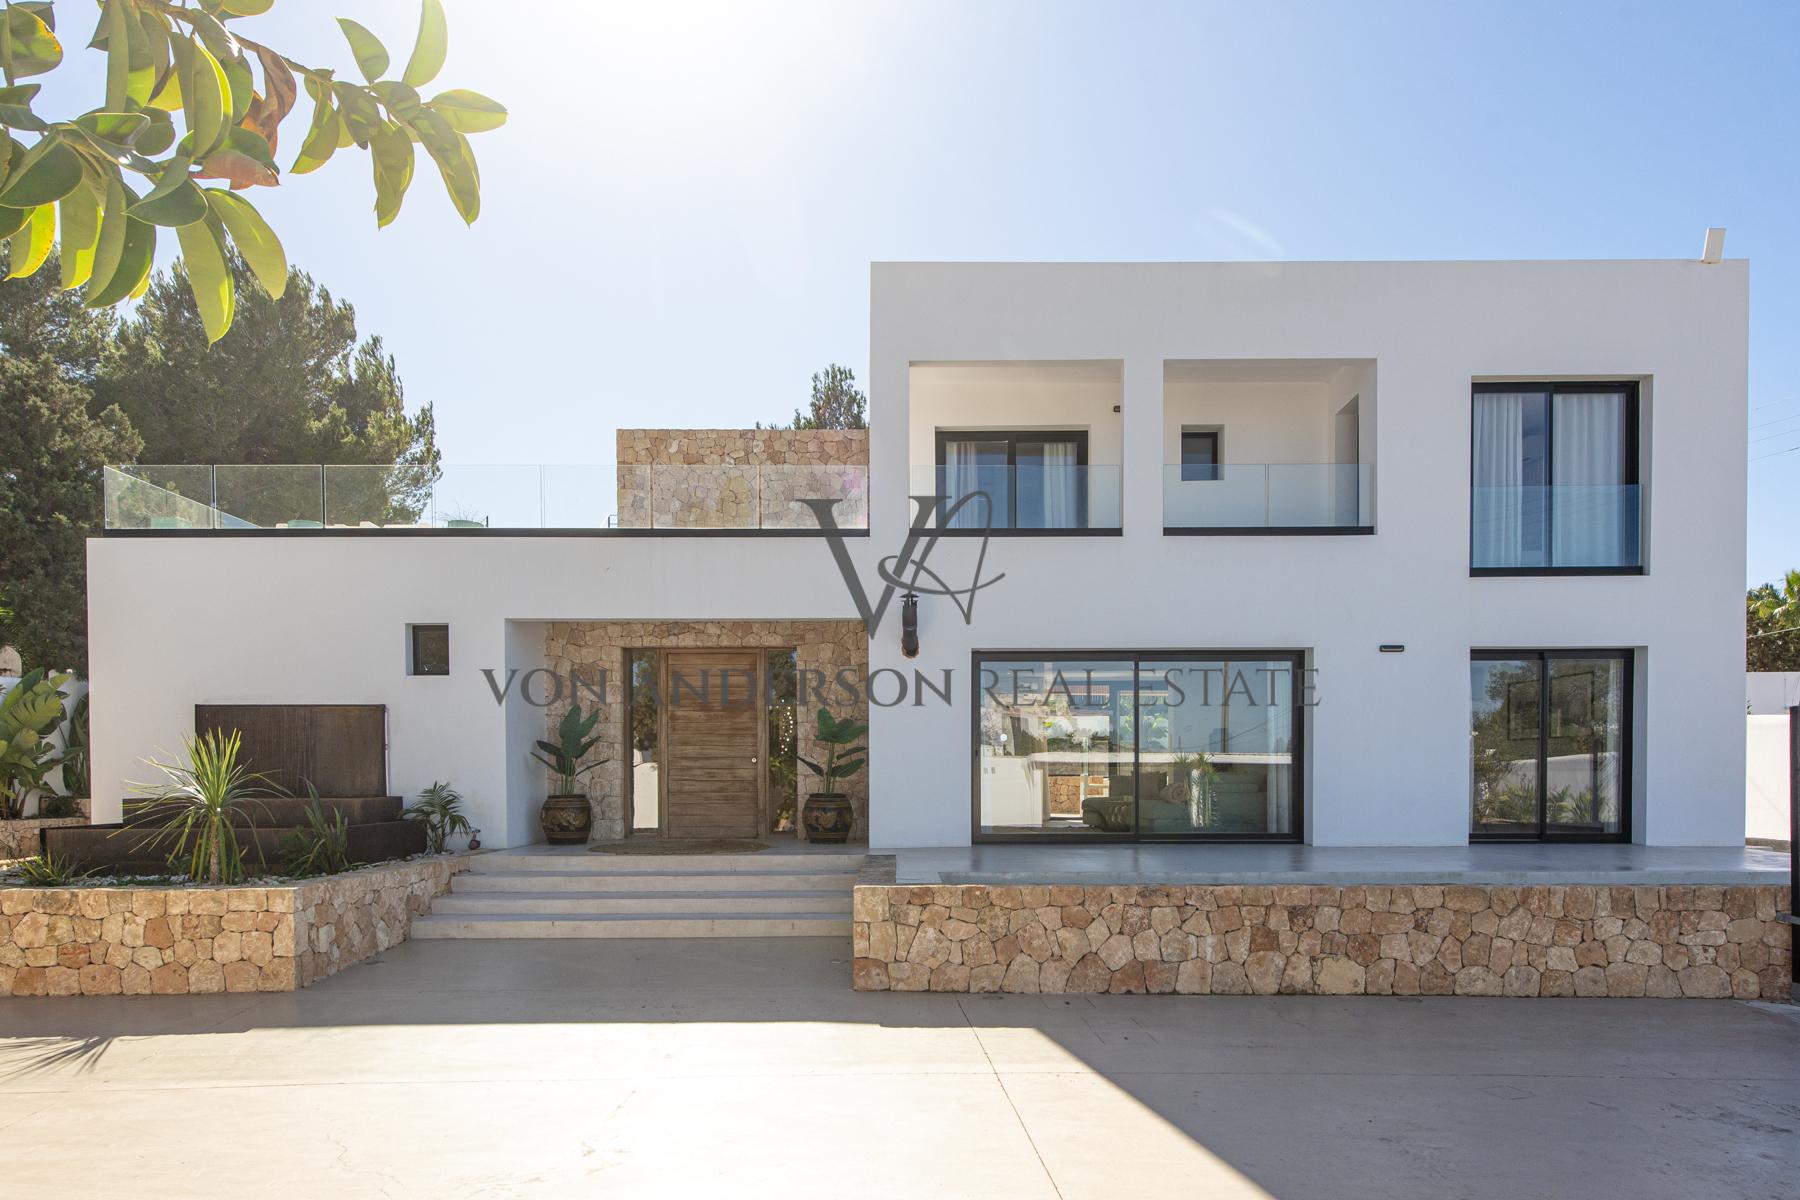 Contemporary Villa Close to Beach Offering Stunning Sea & Sunset Views, ref. VA1057, for sale in Ibiza by Von Anderson Real Estate